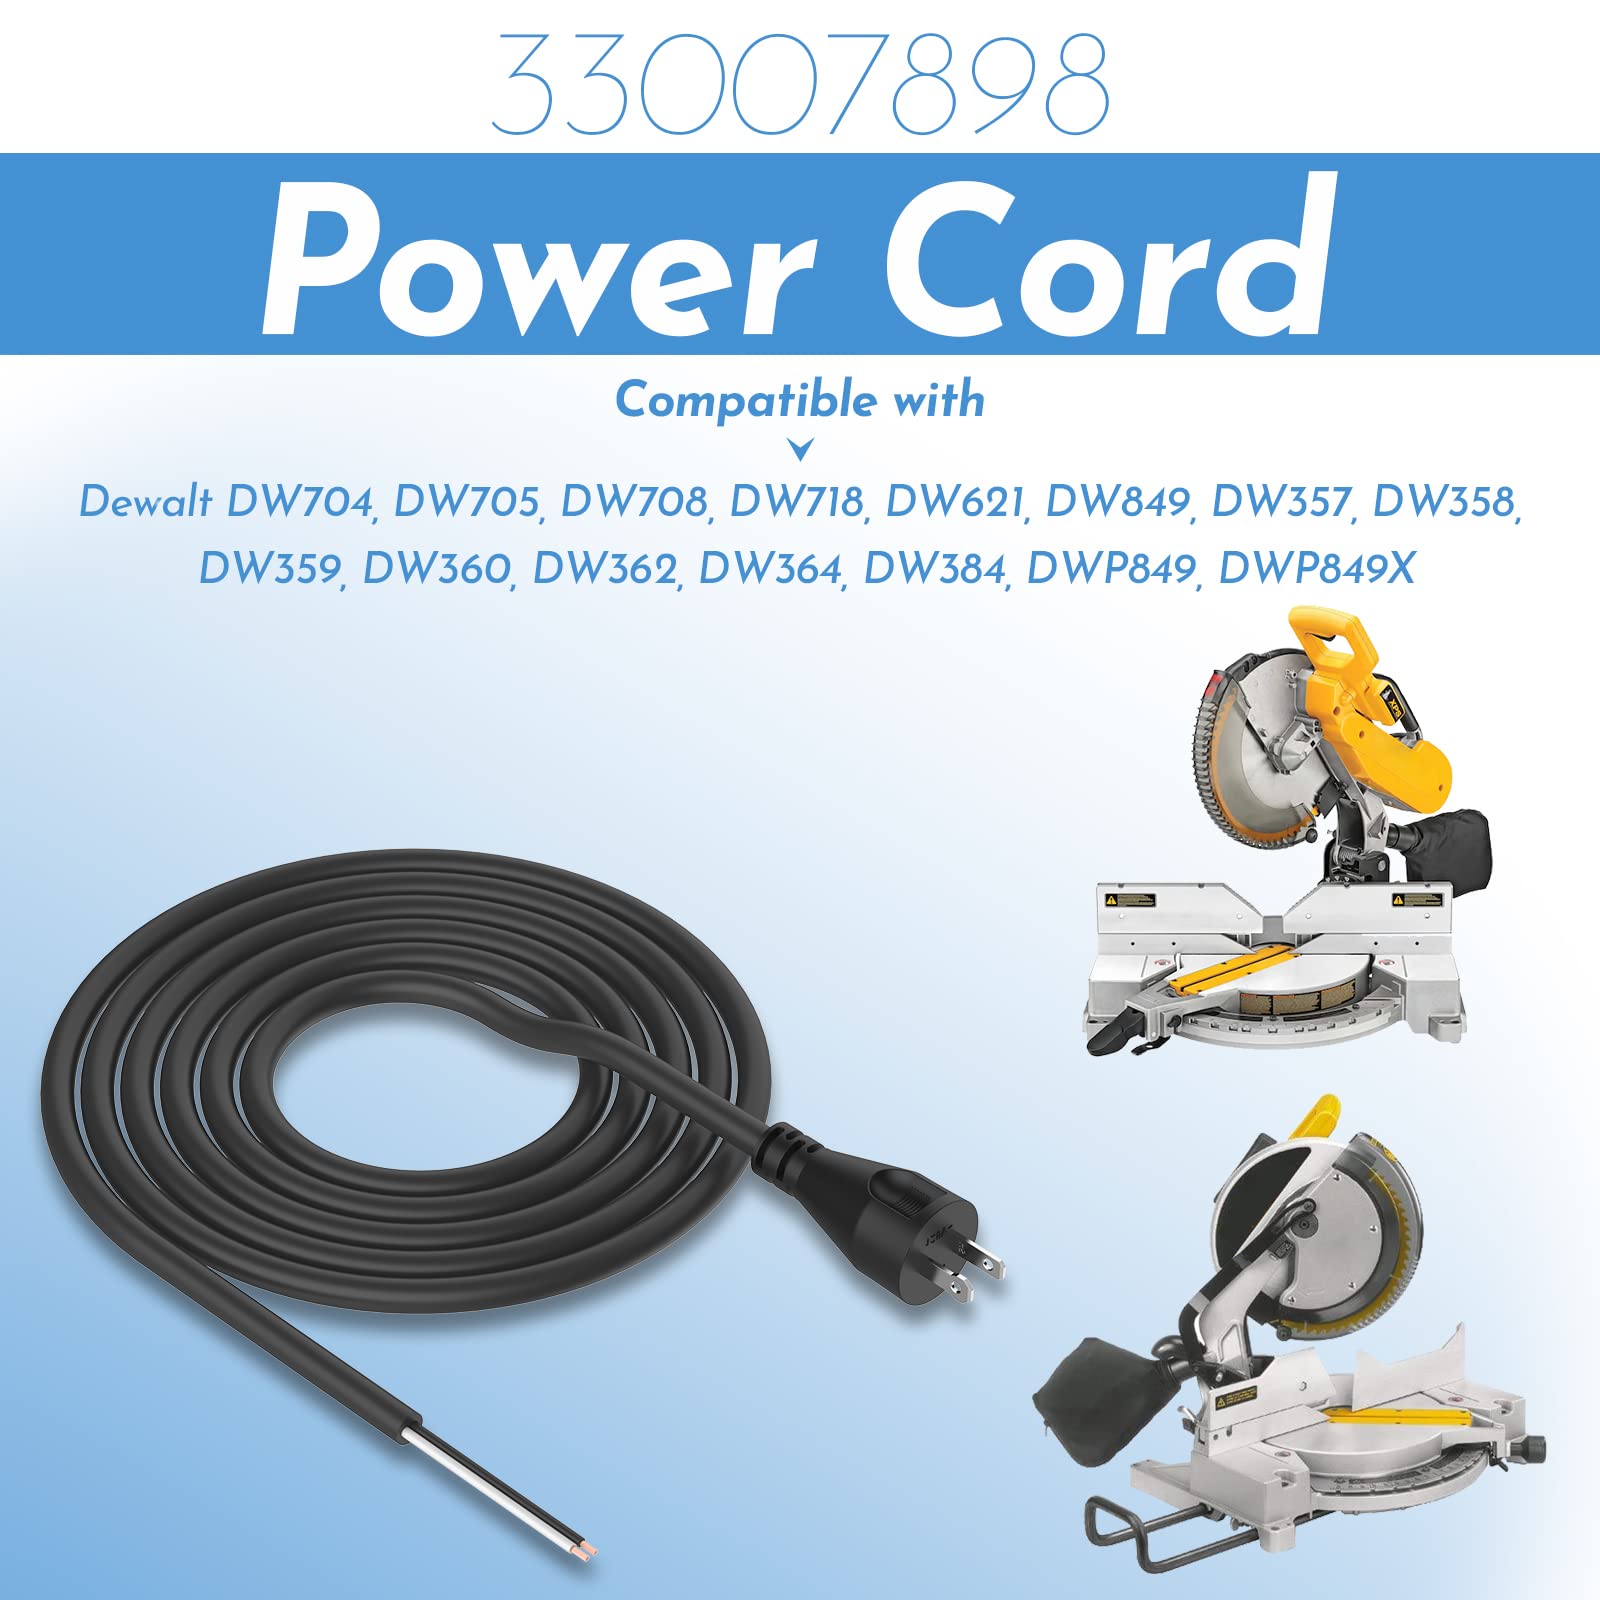 ANTOBLE 33007898 2 Wire 16 Gauge Power Cord Replacement Cord for DEWALT DW704 DW705 DW708 DW718 DW849 DW360 DW384 DWP849X (10 ft)